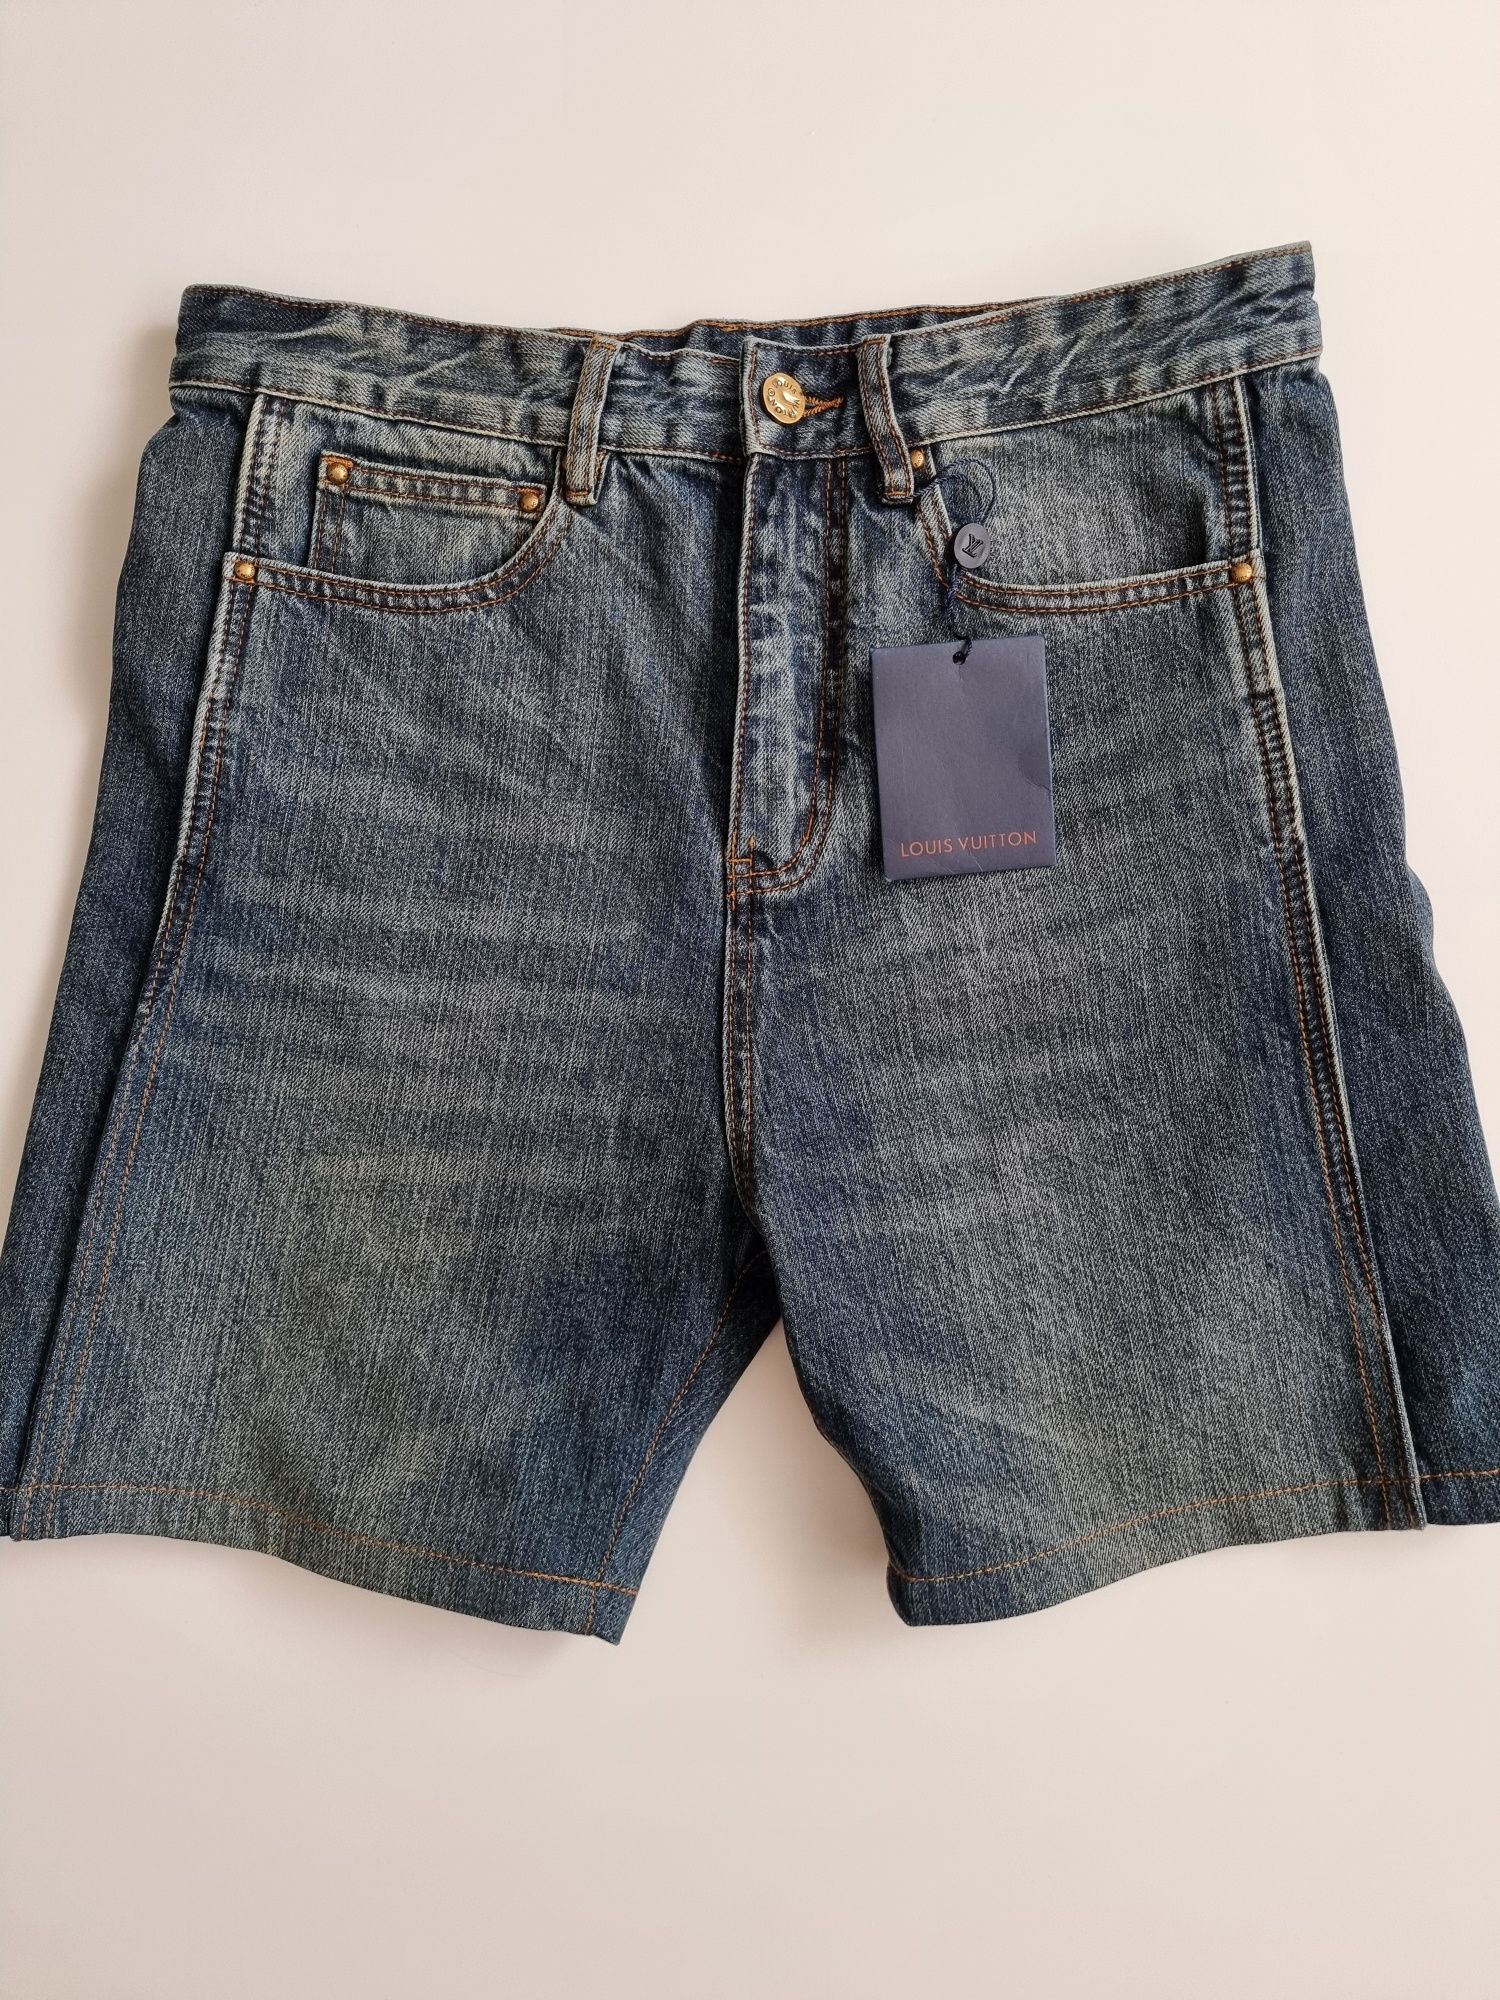 Louis Vuitton шорти джинсові 34р